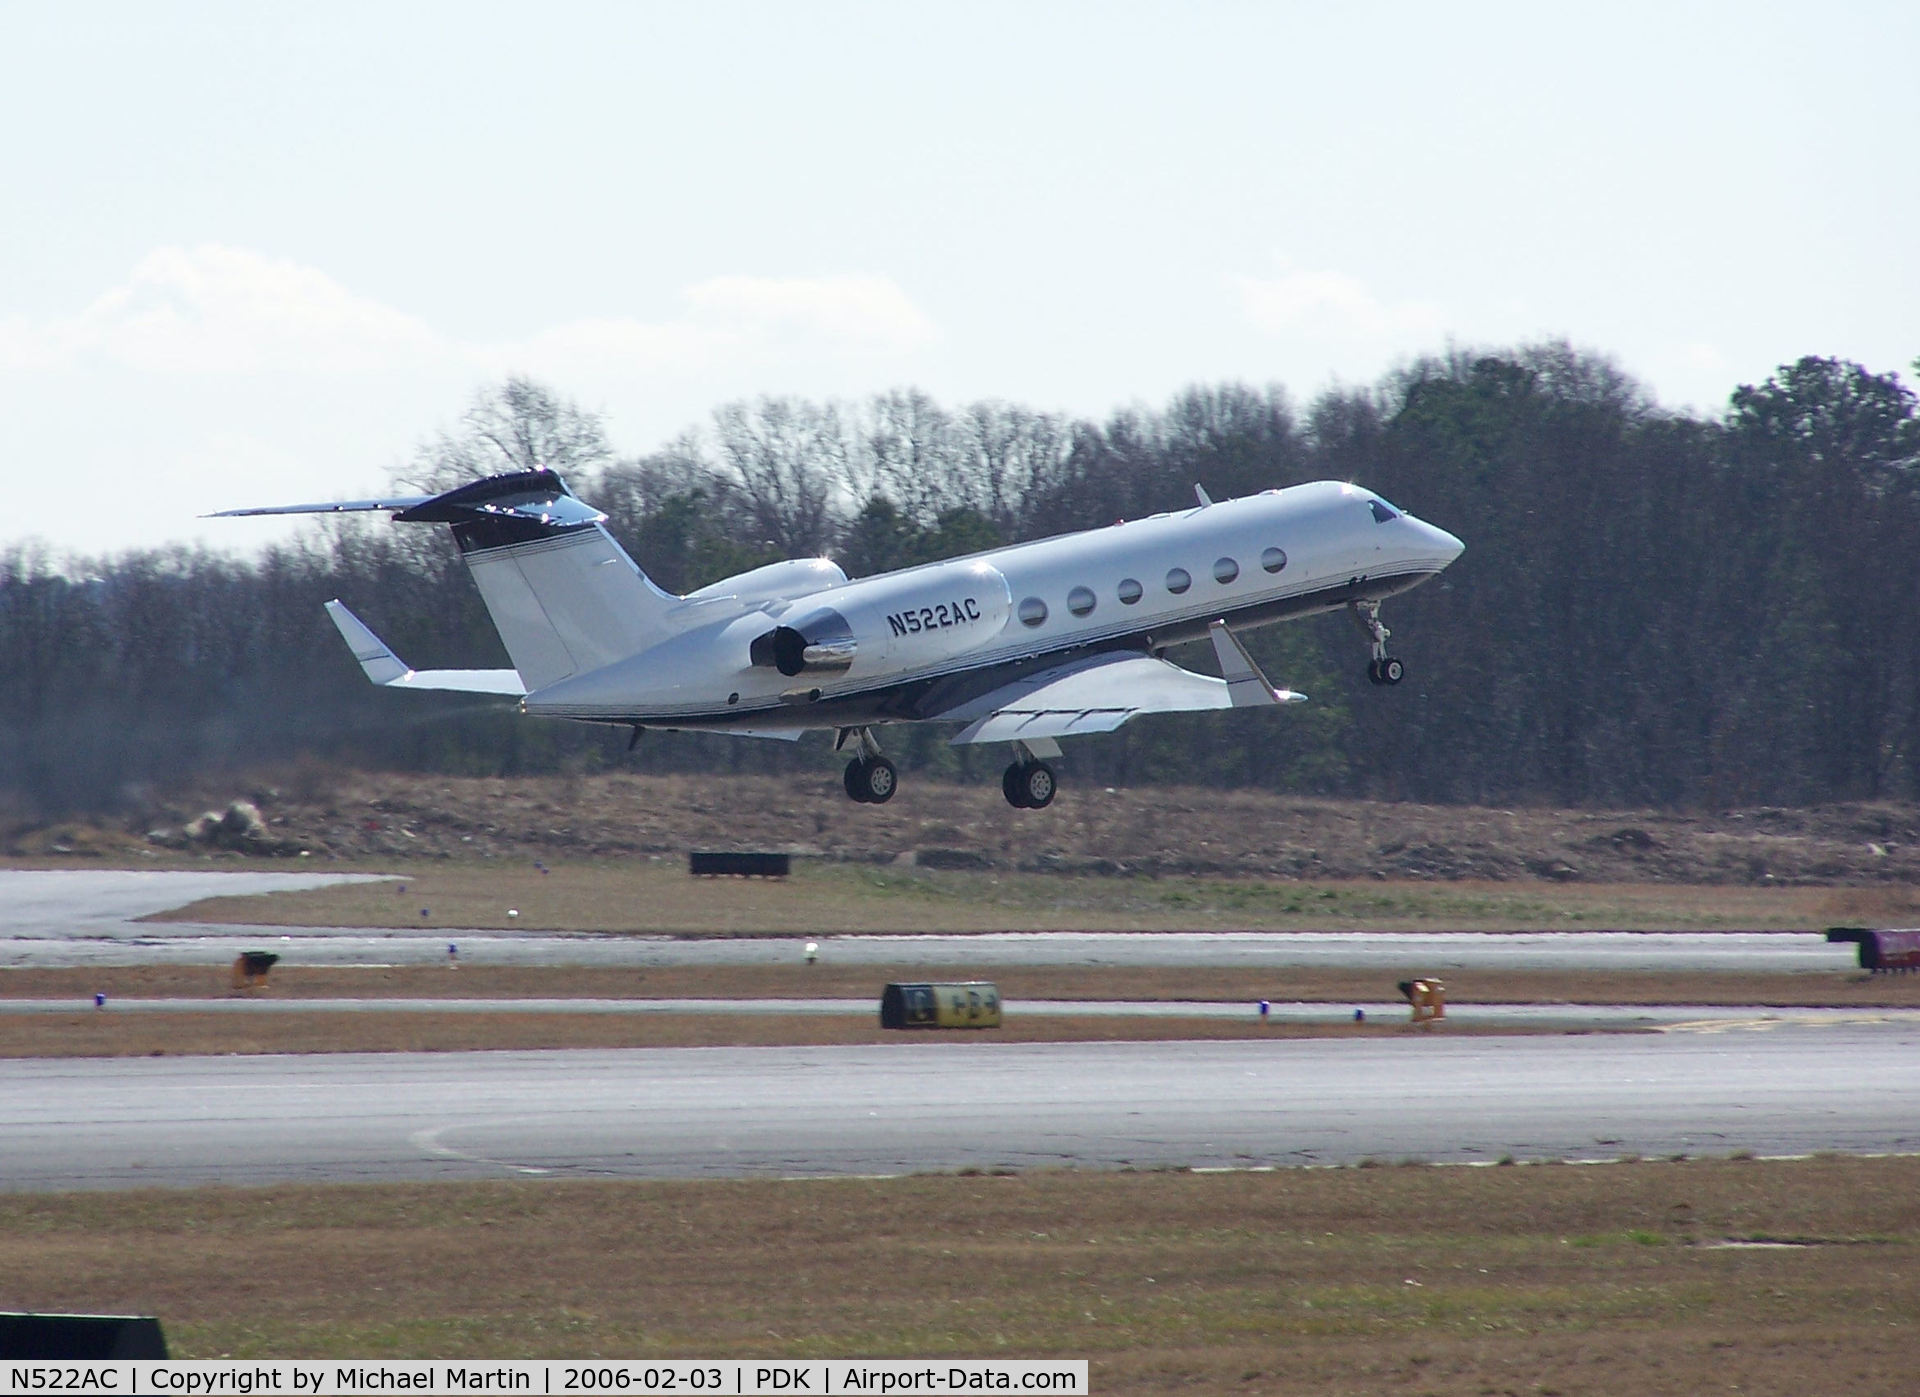 N522AC, 2004 Gulfstream Aerospace G-IV C/N 1524, Departing PDK - Starting to rotate gear.